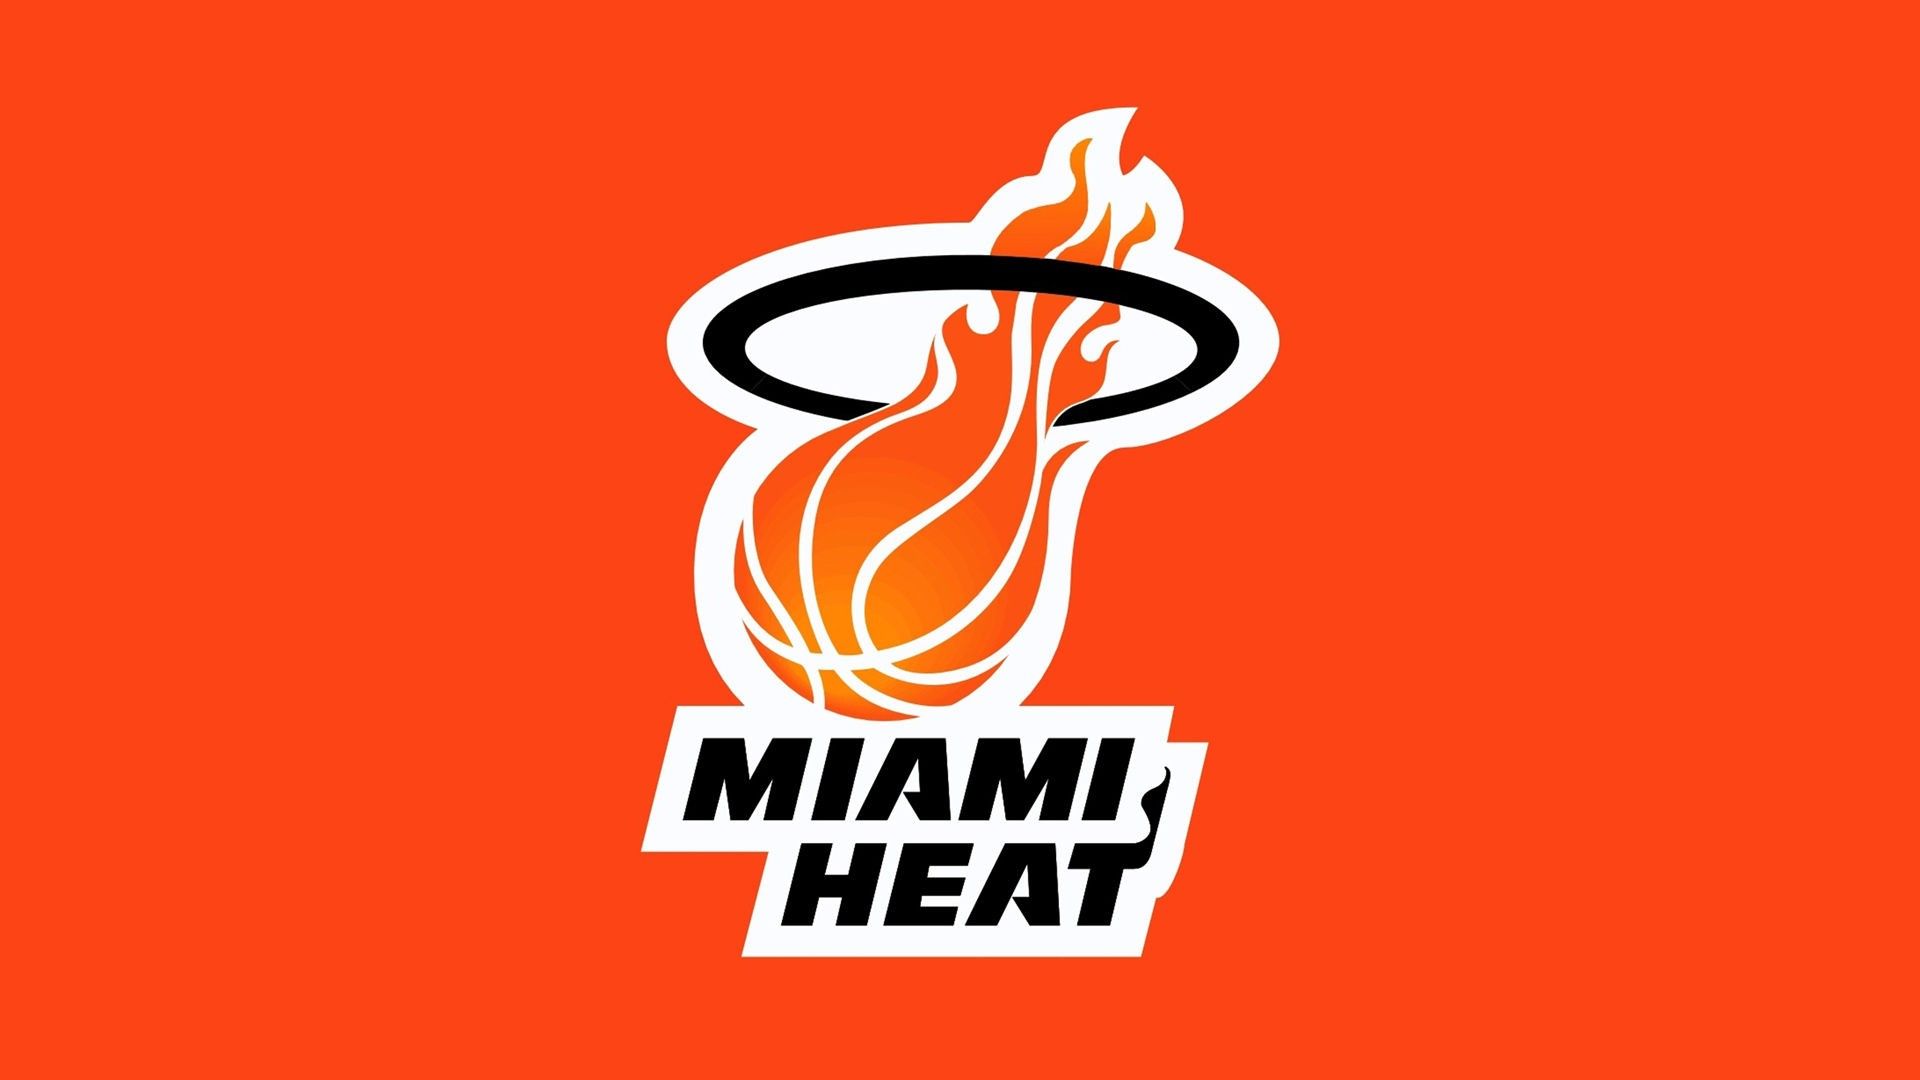 HD Miami Heat Background Basketball Wallpaper. Miami heat, Miami heat logo, Basketball wallpaper